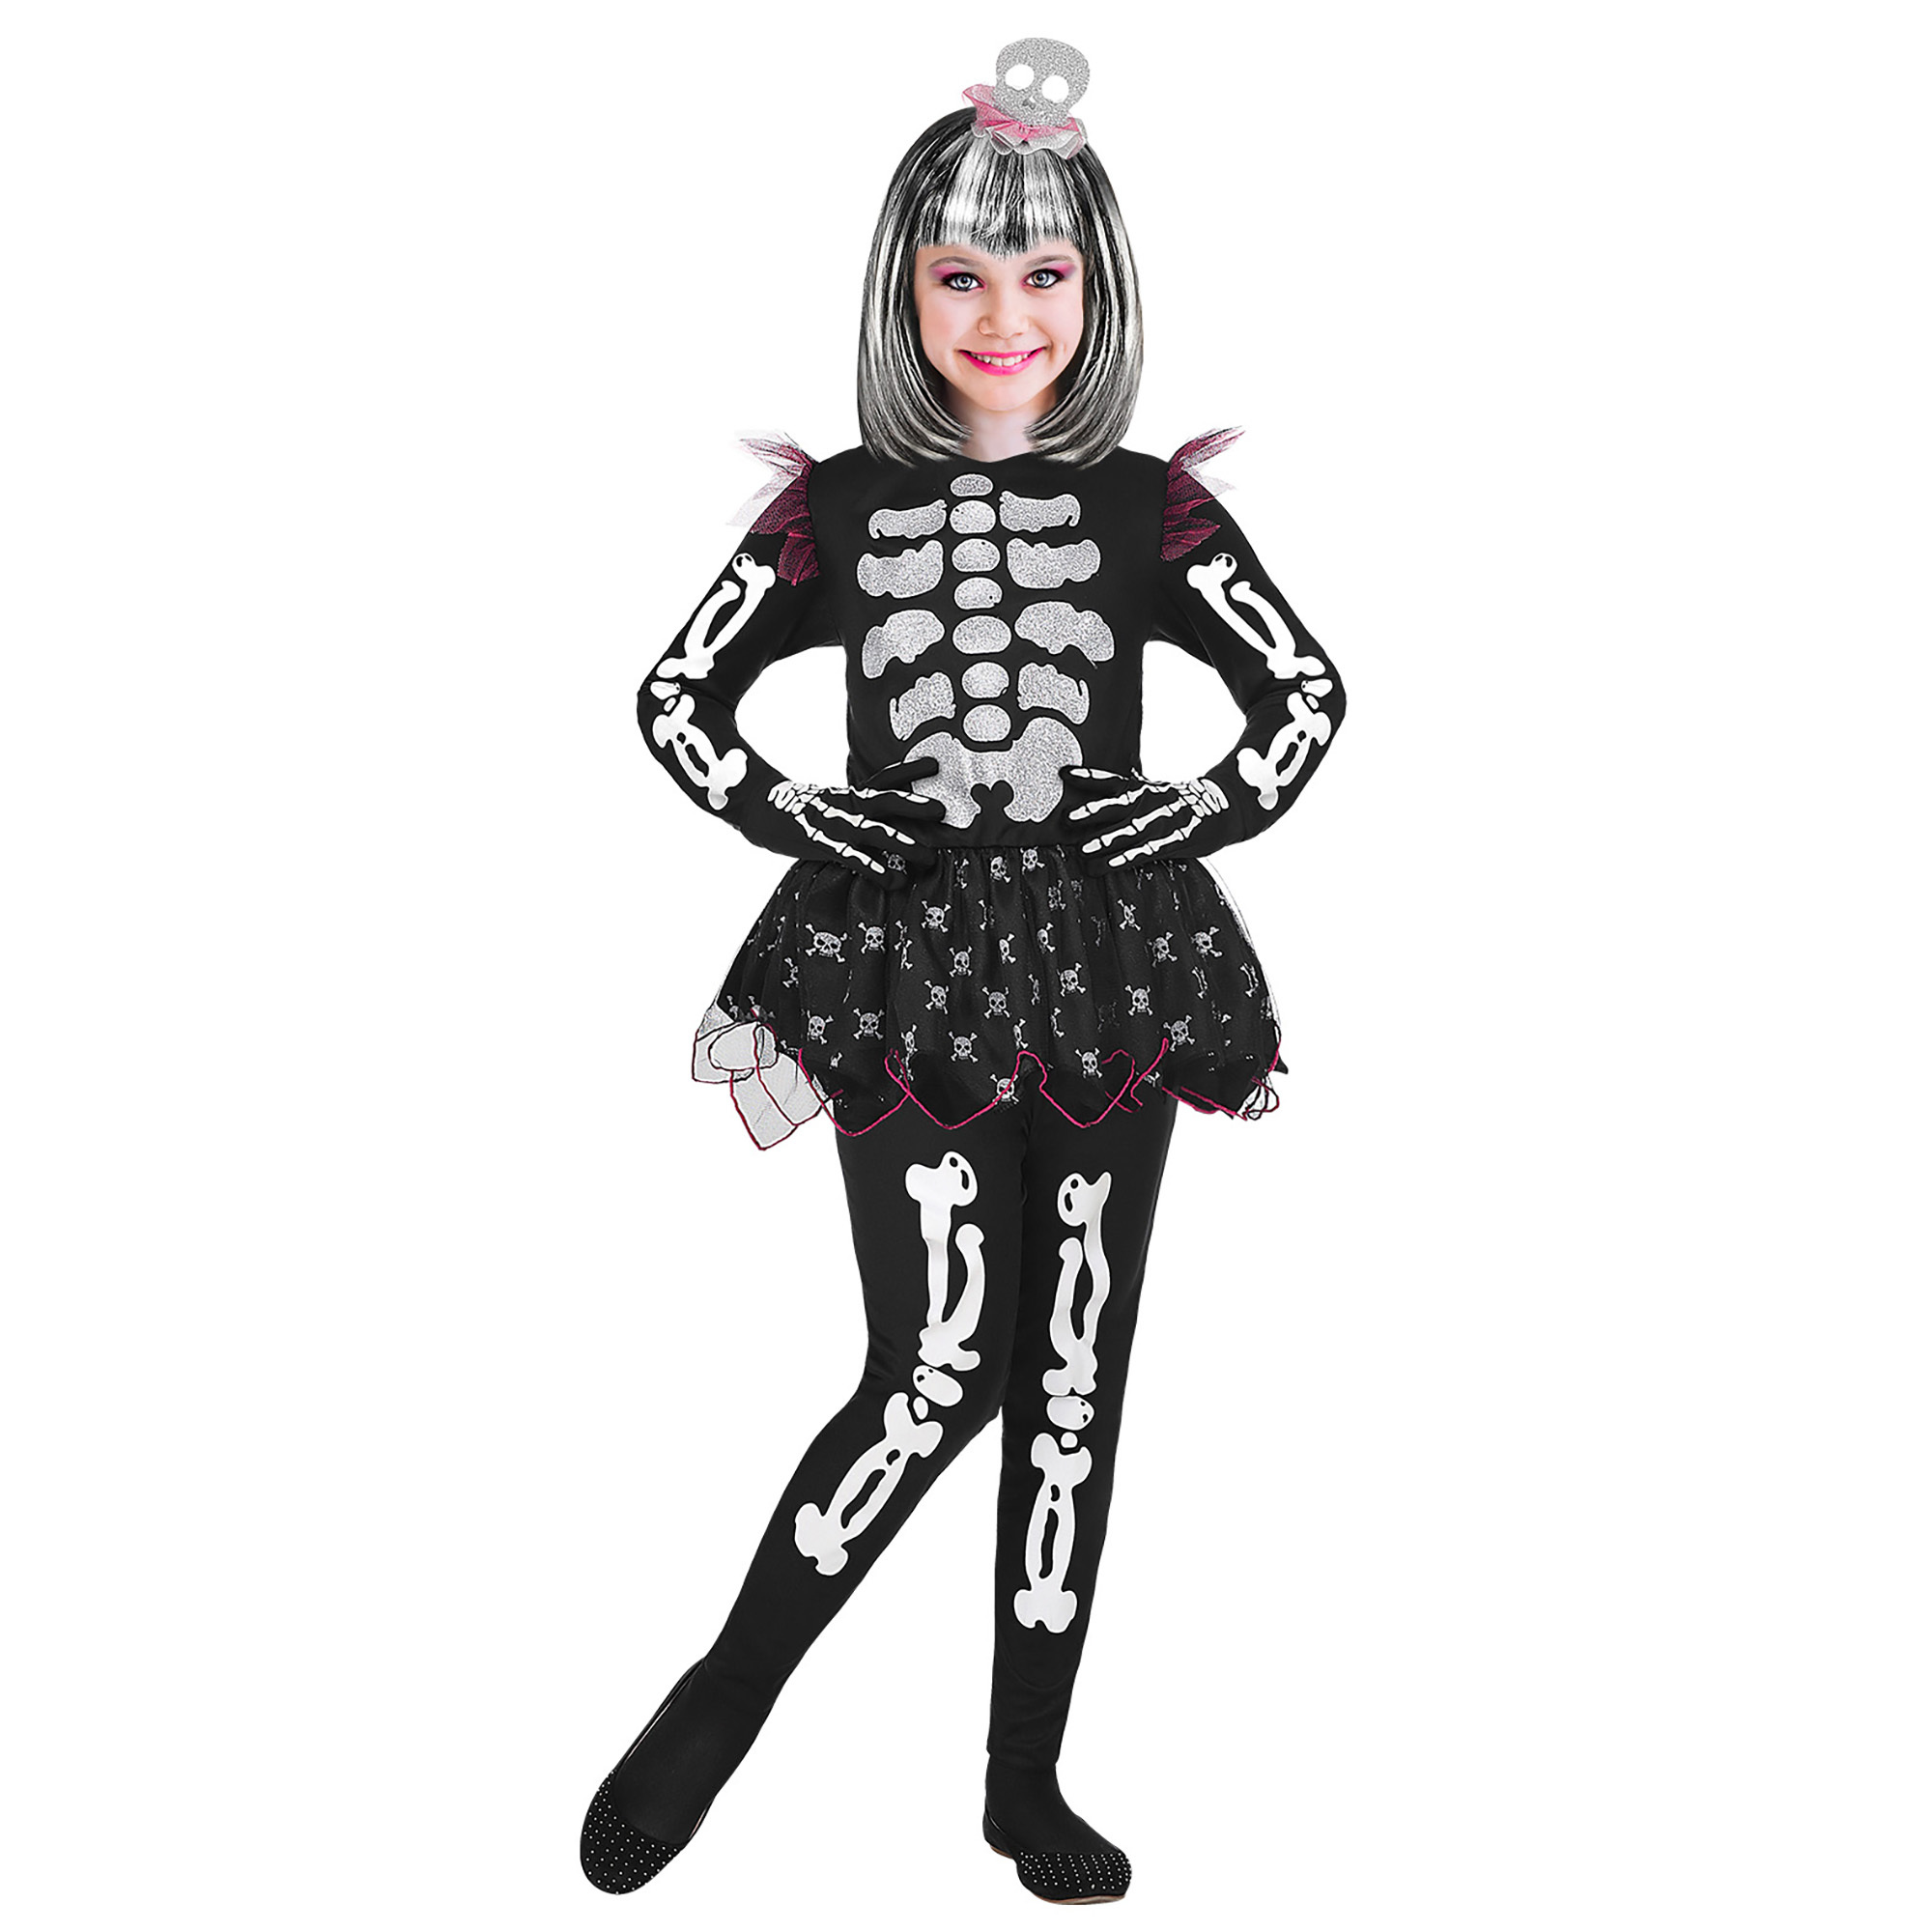 Skelet kostuum meisje met zwarte tutu